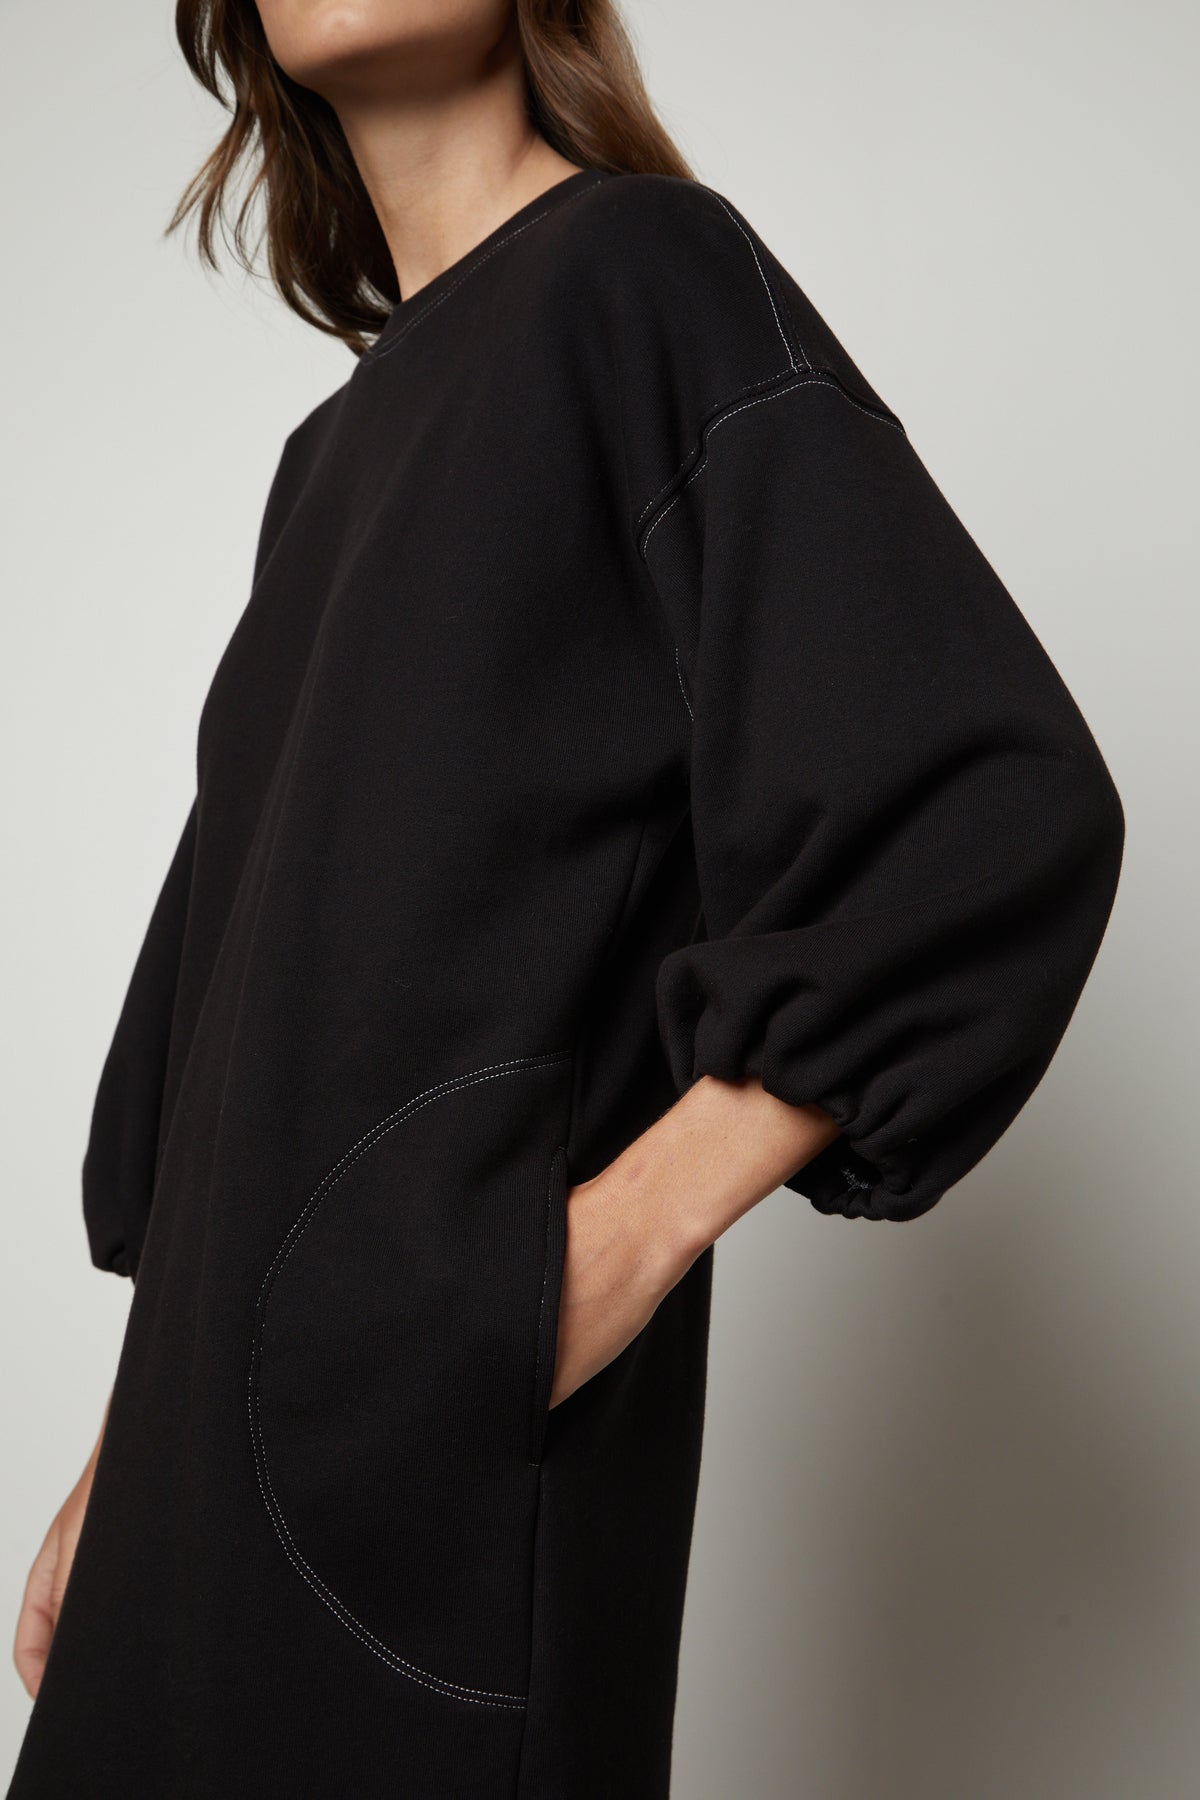 The model is wearing a Velvet by Graham & Spencer black sleeveless dress with pockets.-26883616932033